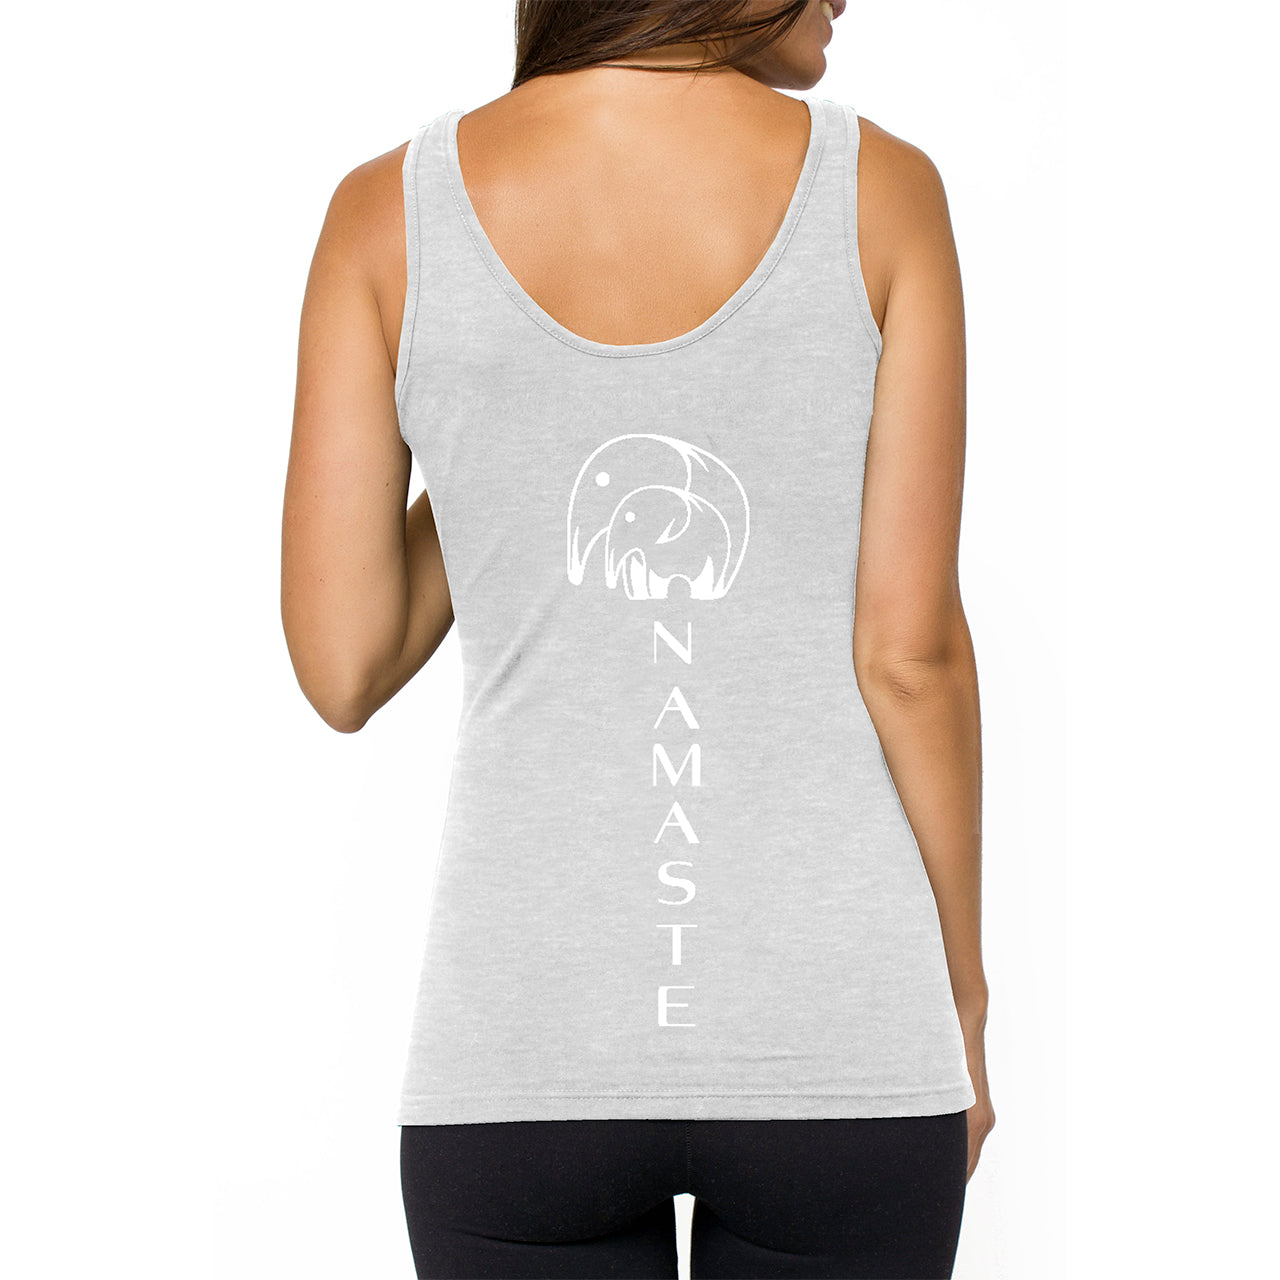 Women's Yoga Tops & T-Shirts